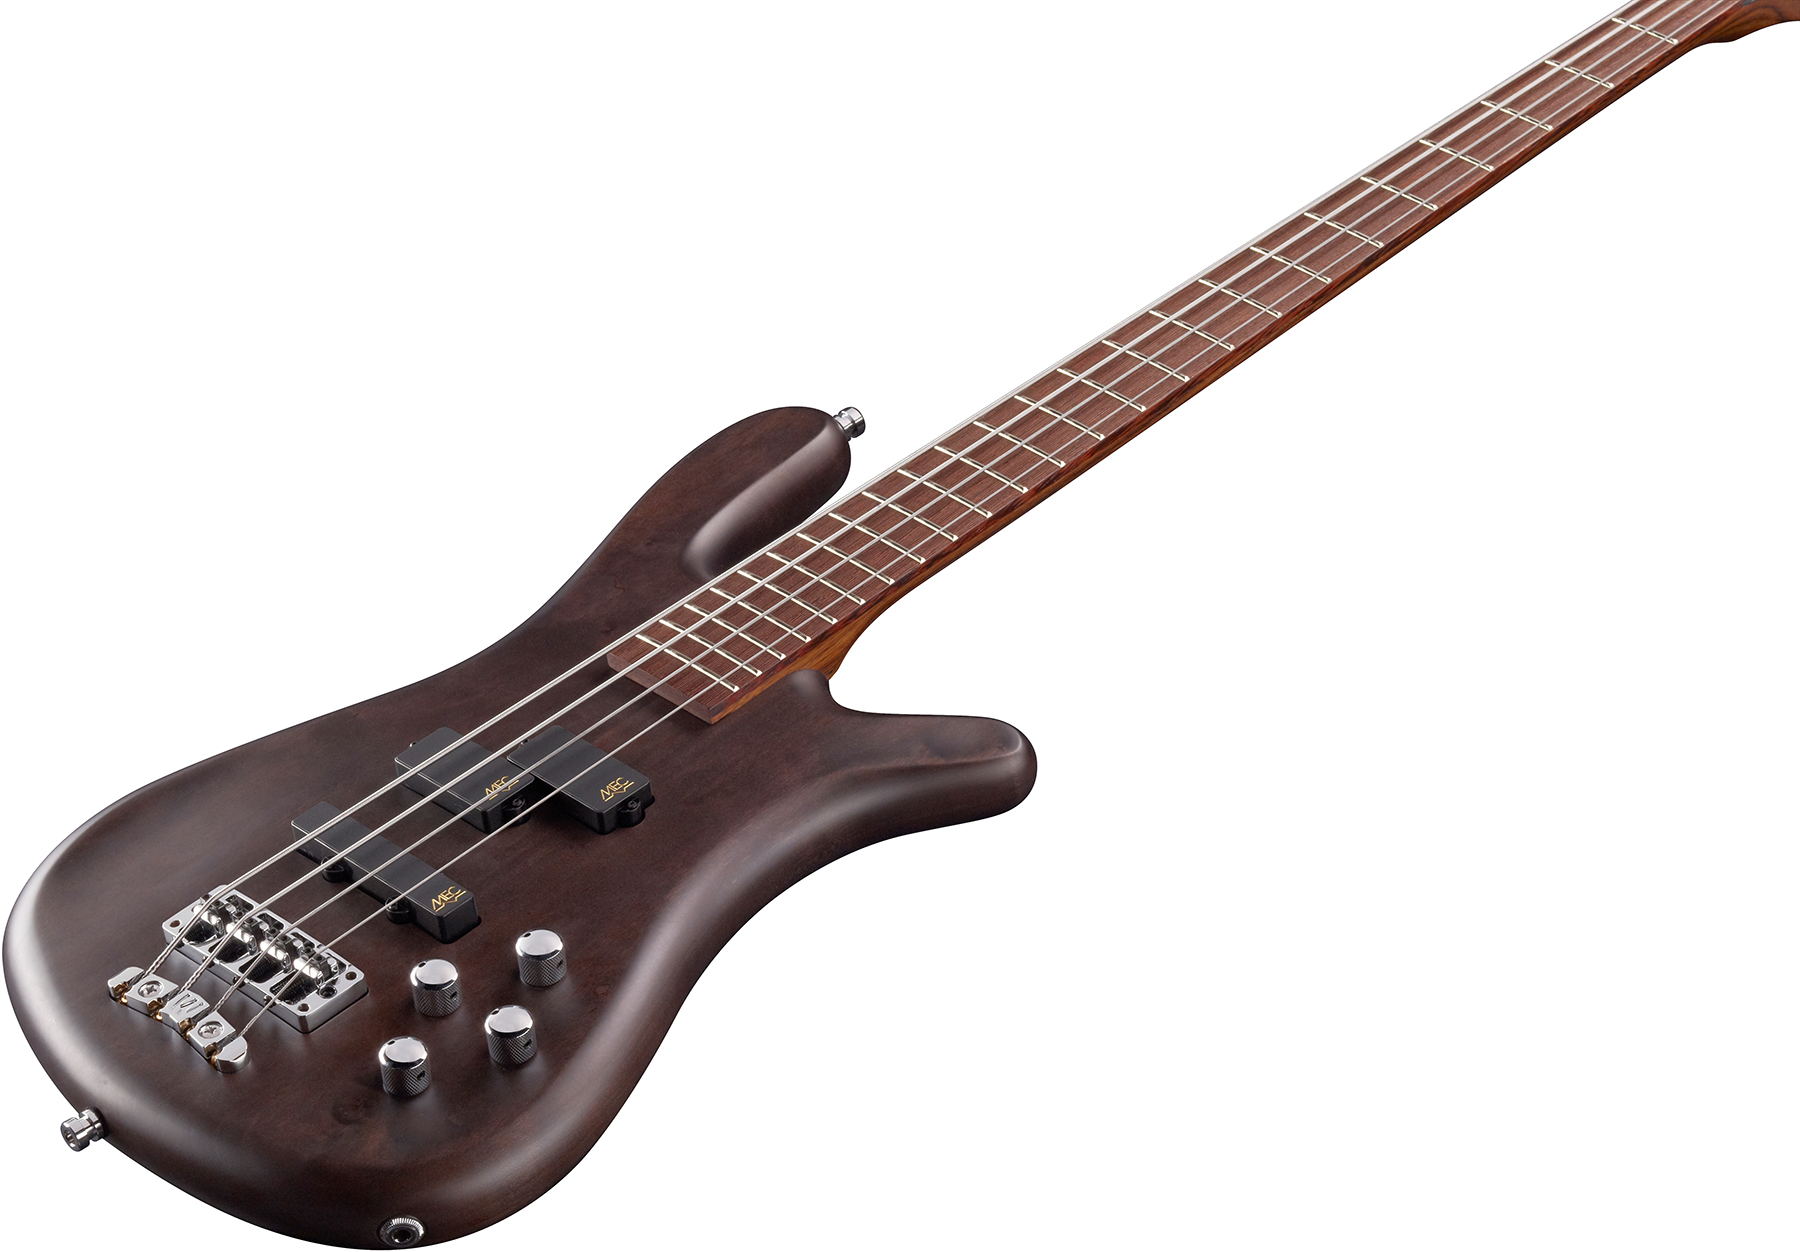 Warwick Streamer Lx4 Pro Gps 4c Active Wen - Nirvana Black Satin - Solid body electric bass - Variation 2